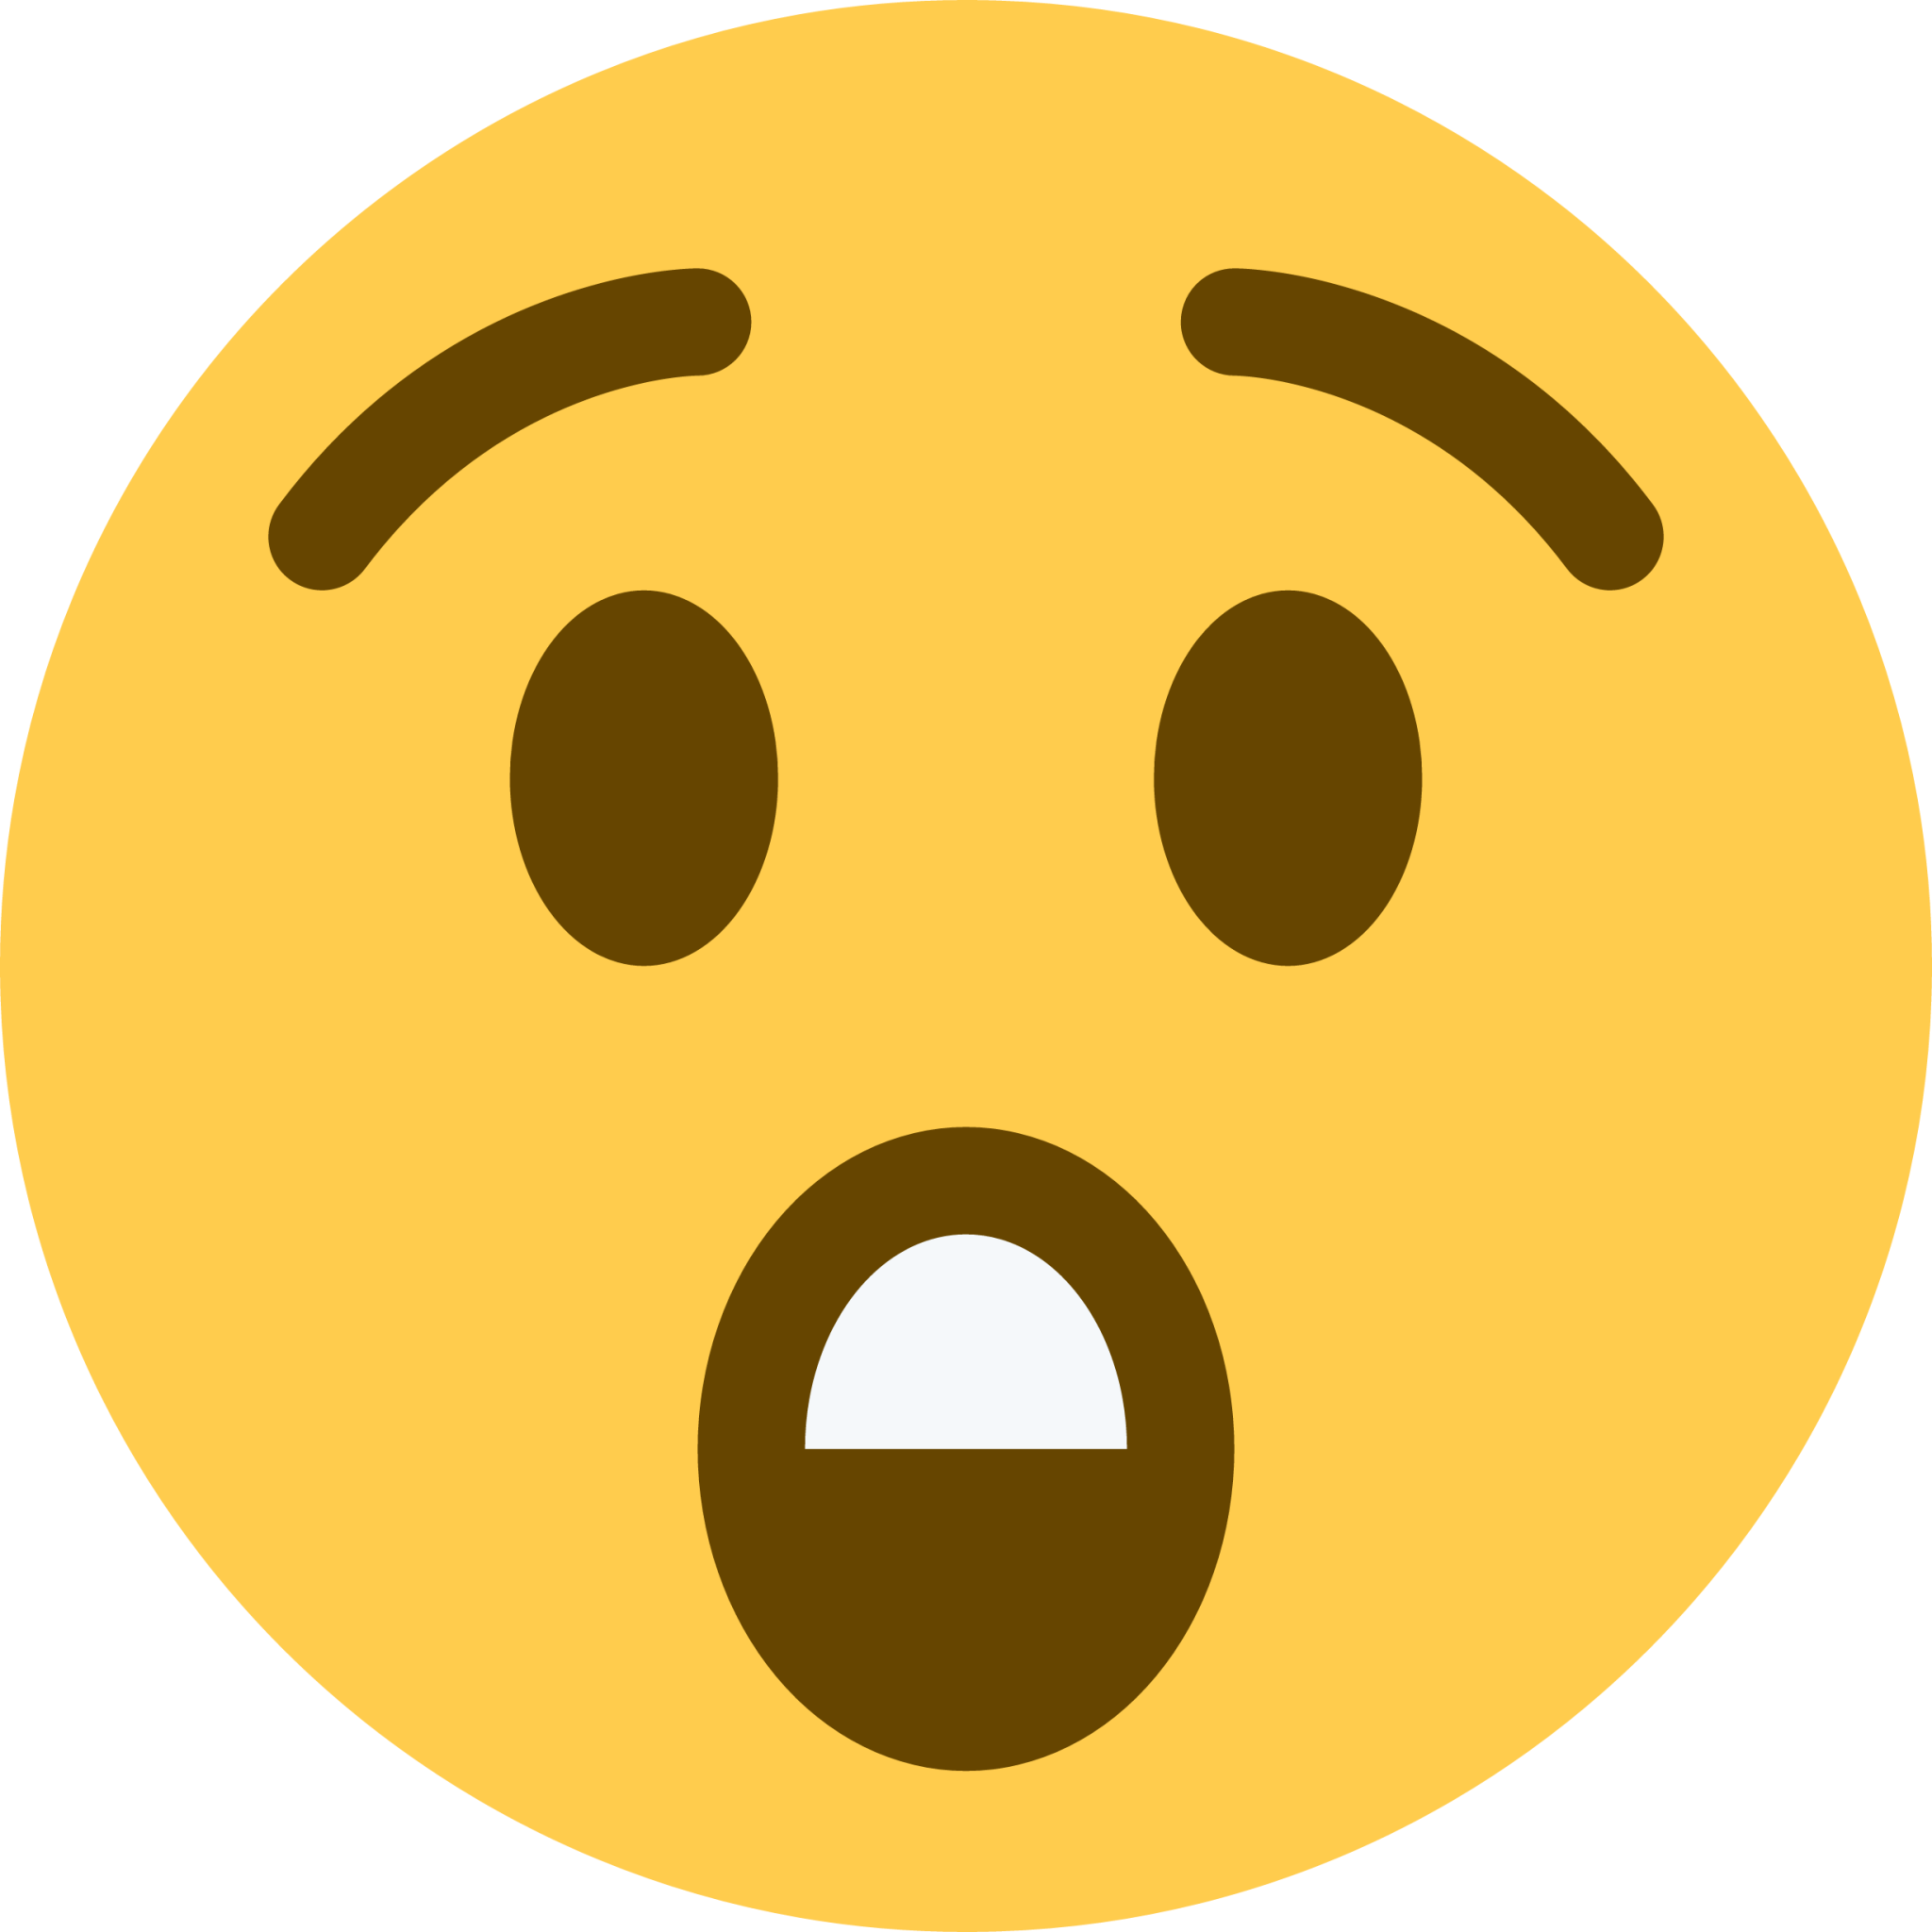 😲 Astonished Face Emoji, Shocked Emoji